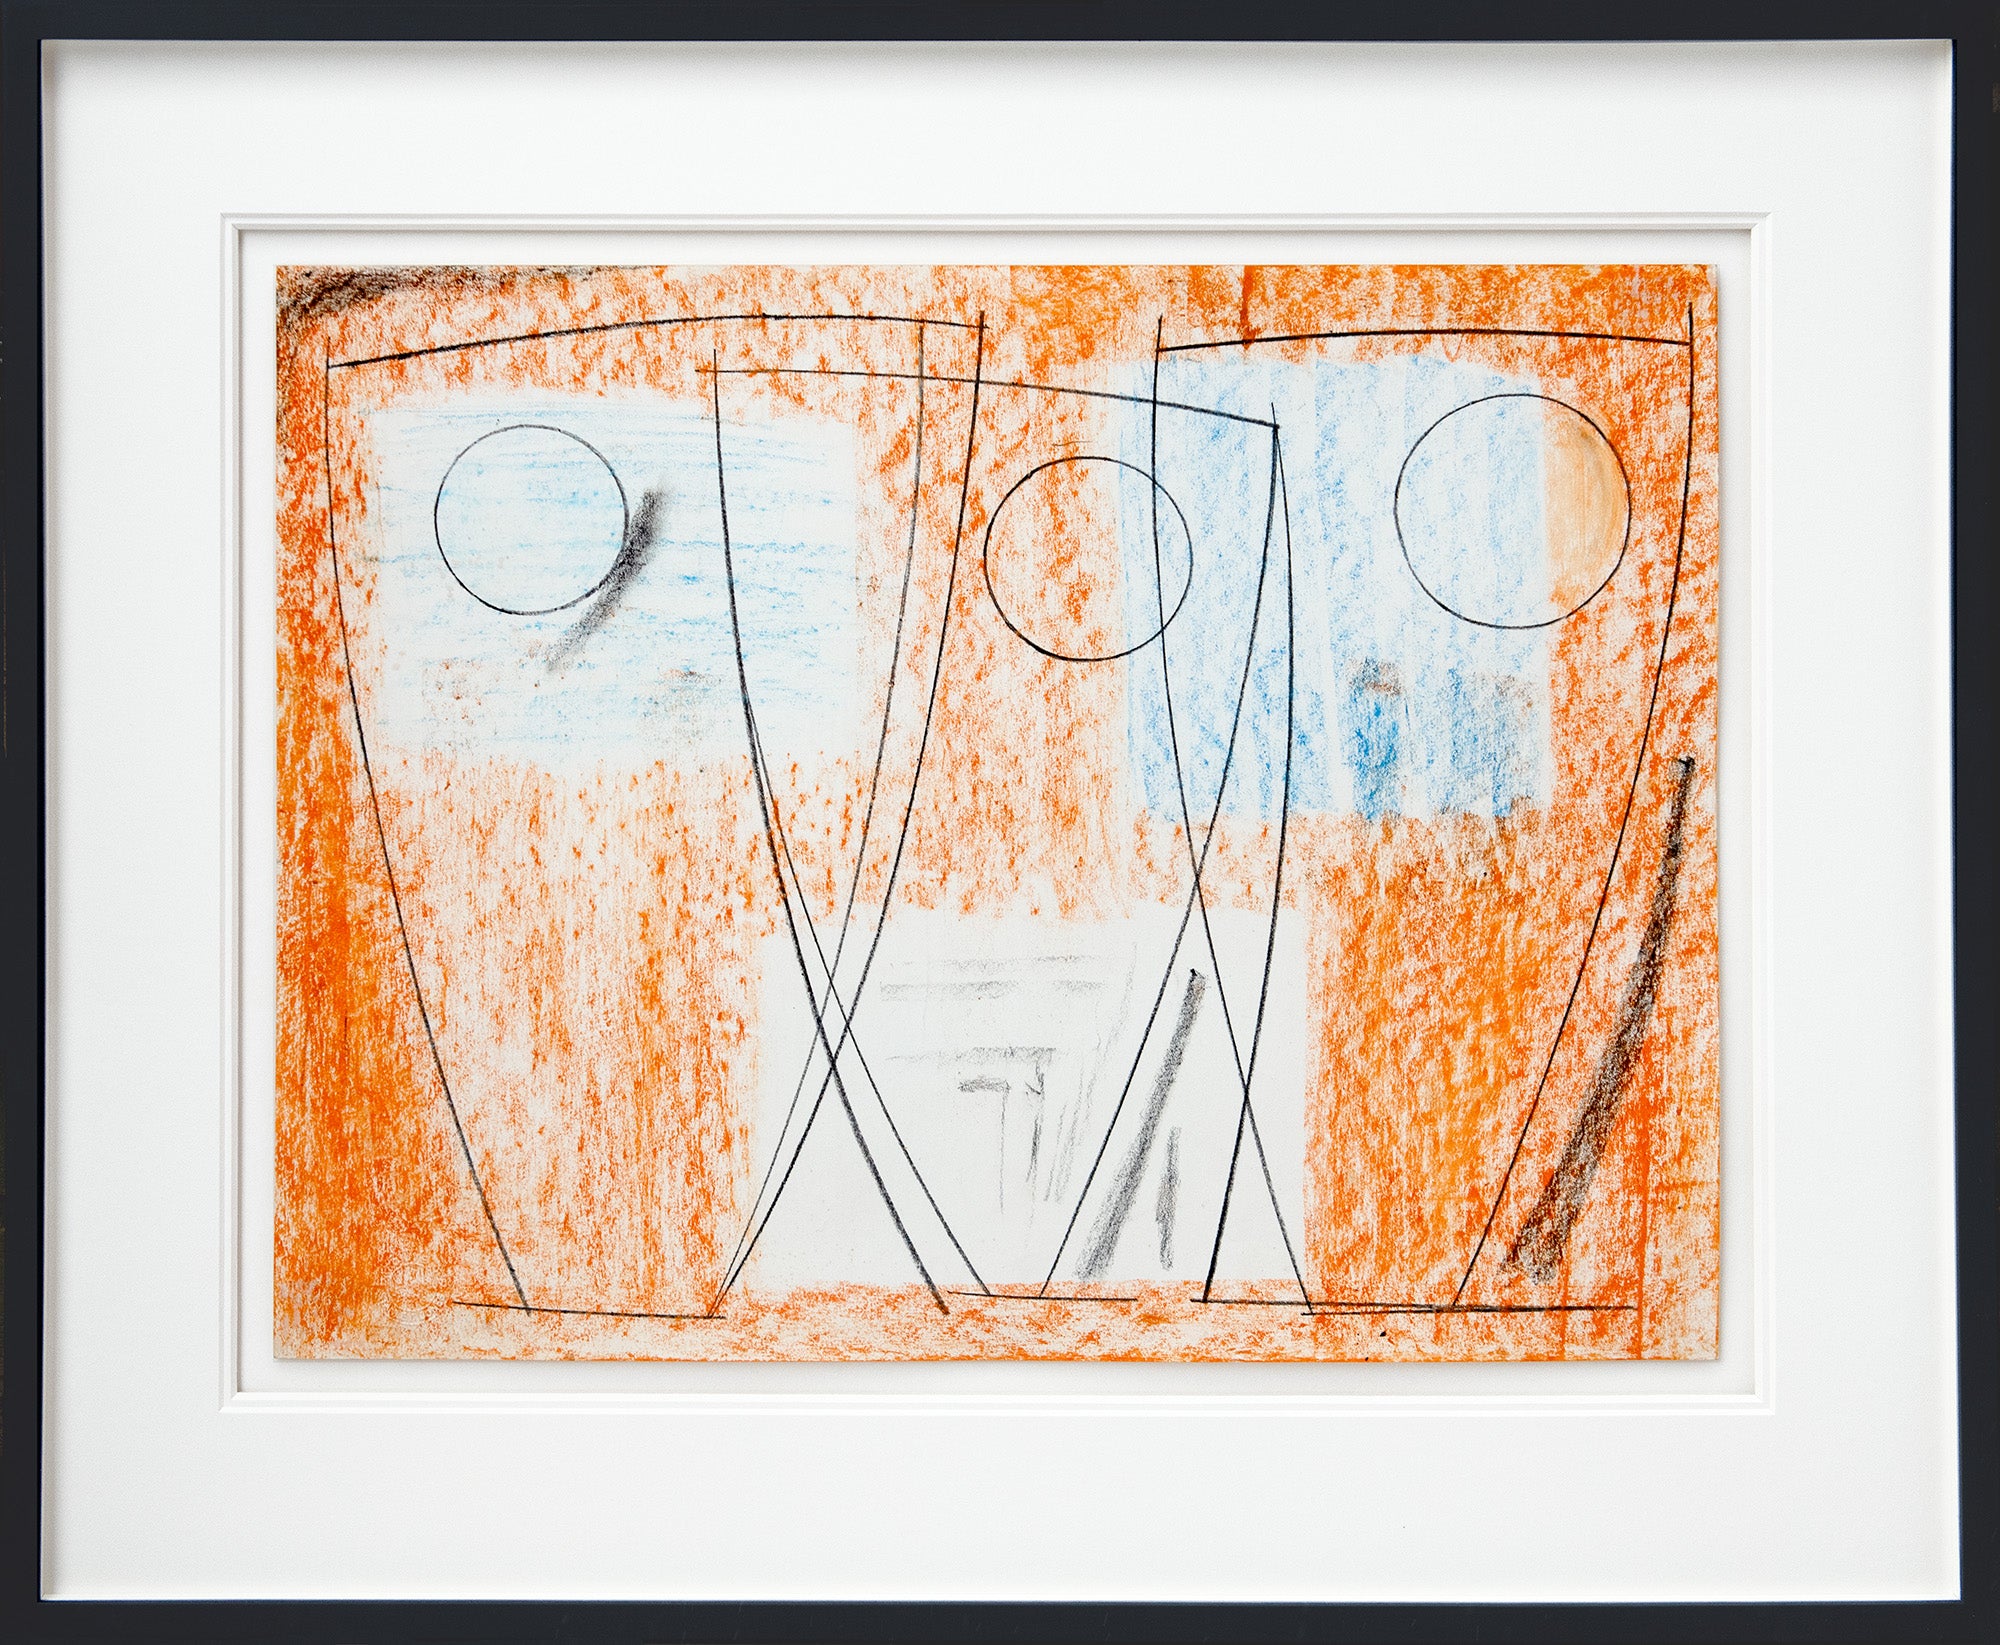 Barbara Hepworth, Three Forms in Echelon, 1960s, chalk and crayon